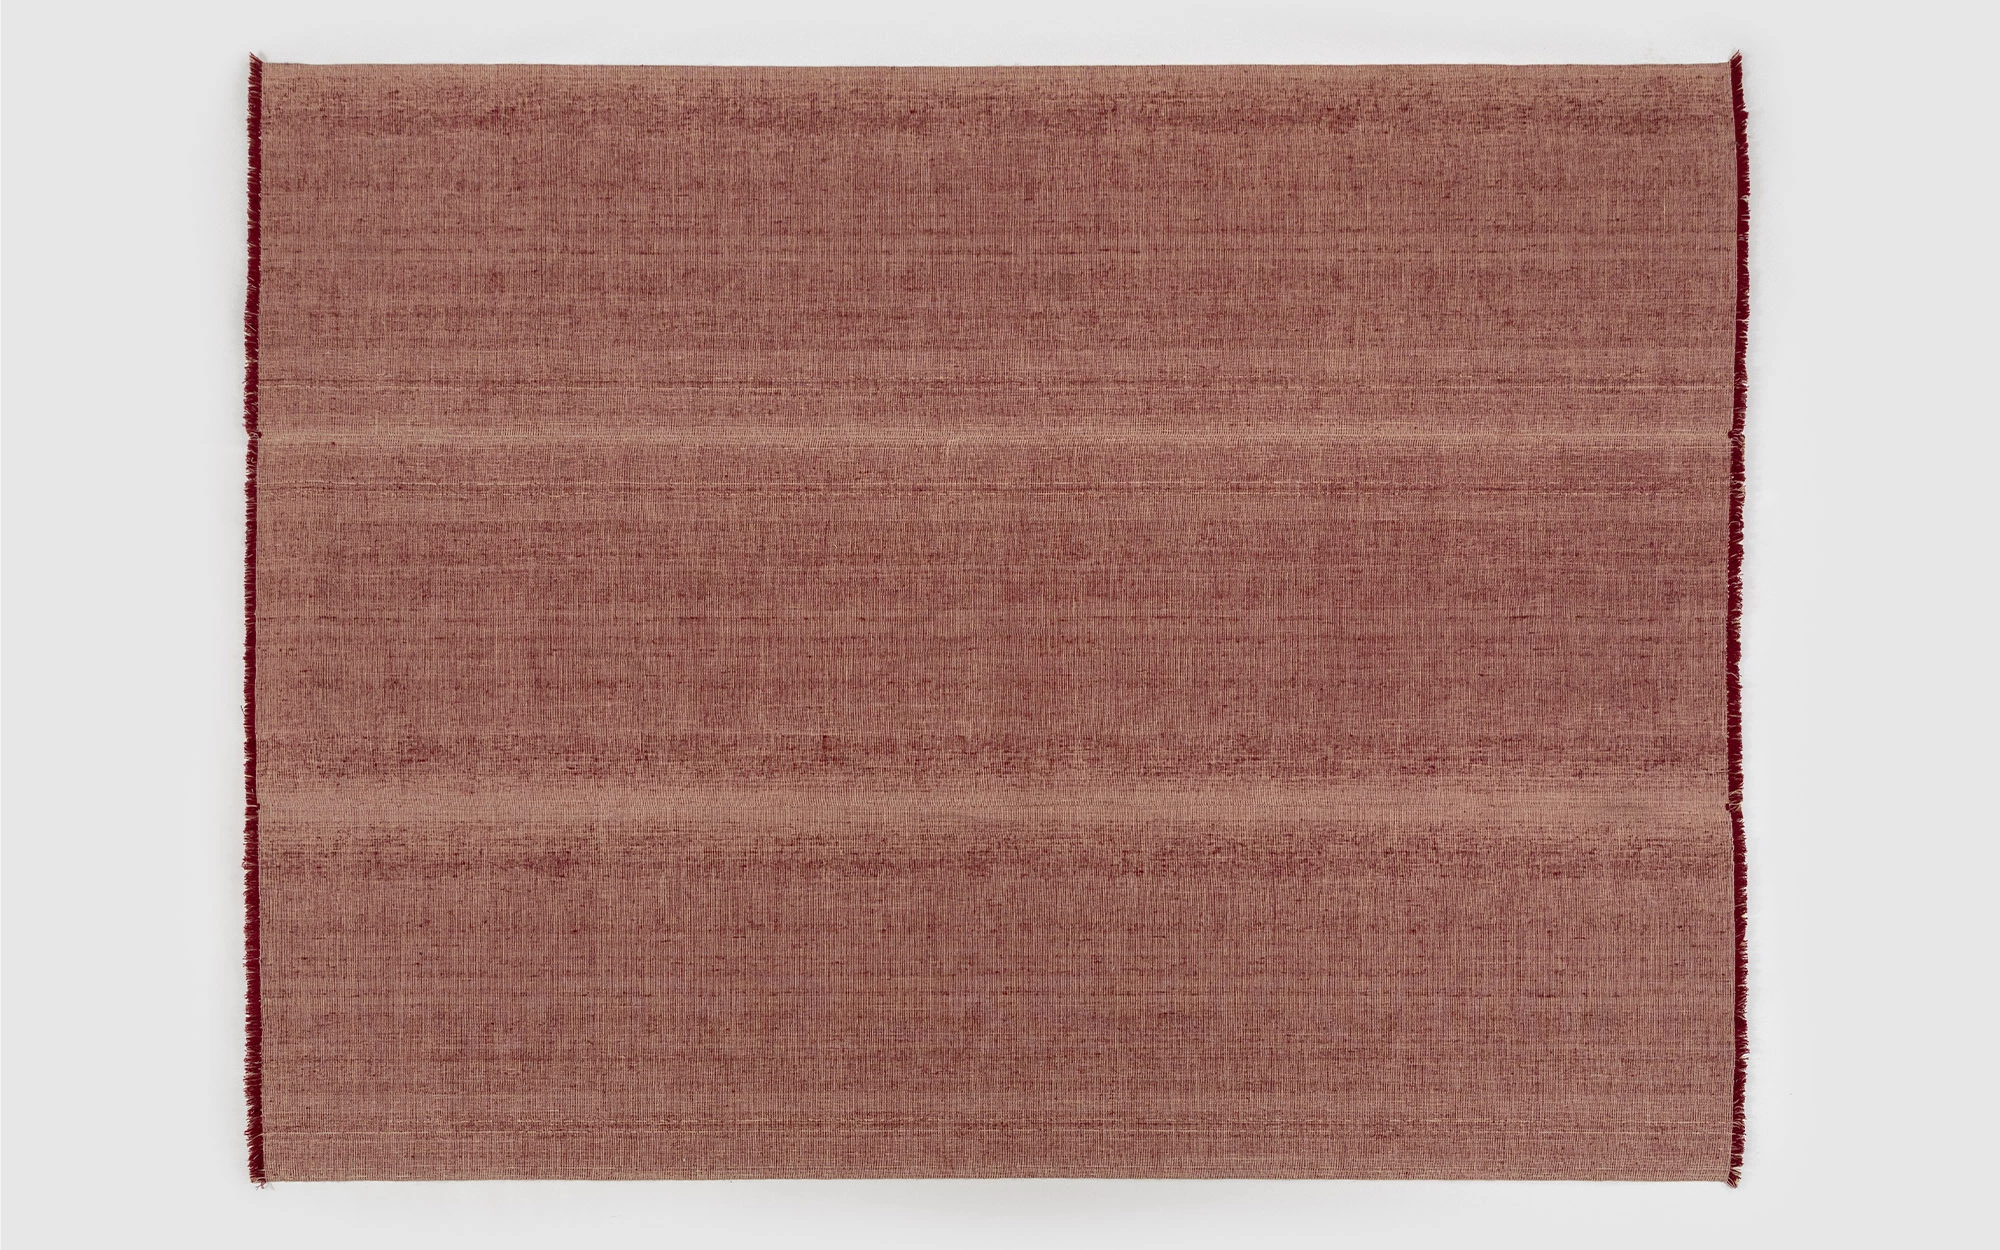 Wilton Carpet L - Ronan & Erwan Bouroullec - Stool - Galerie kreo